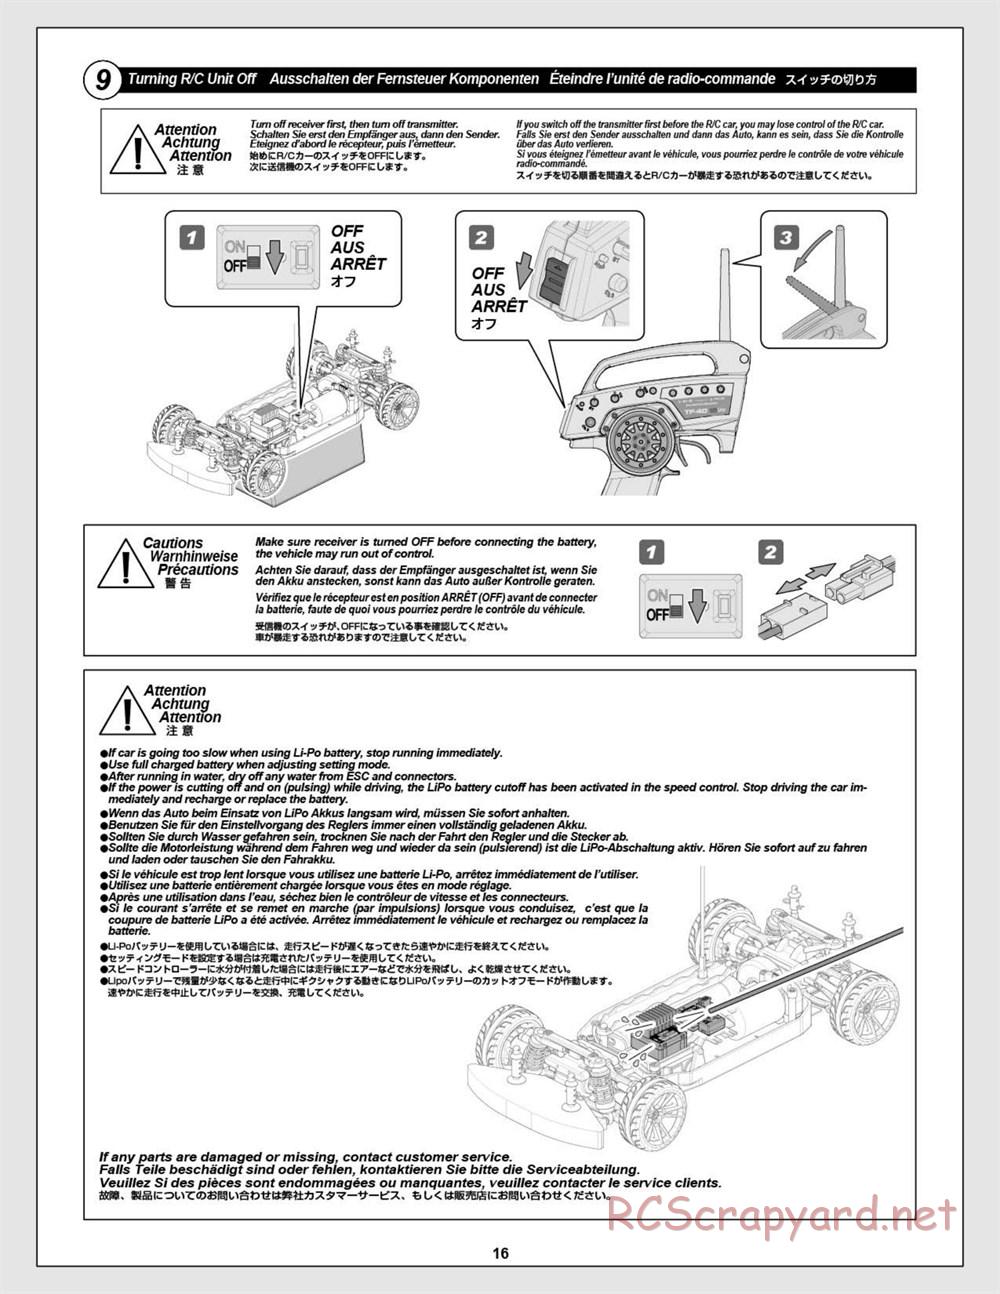 HPI - E10 - Manual - Page 16